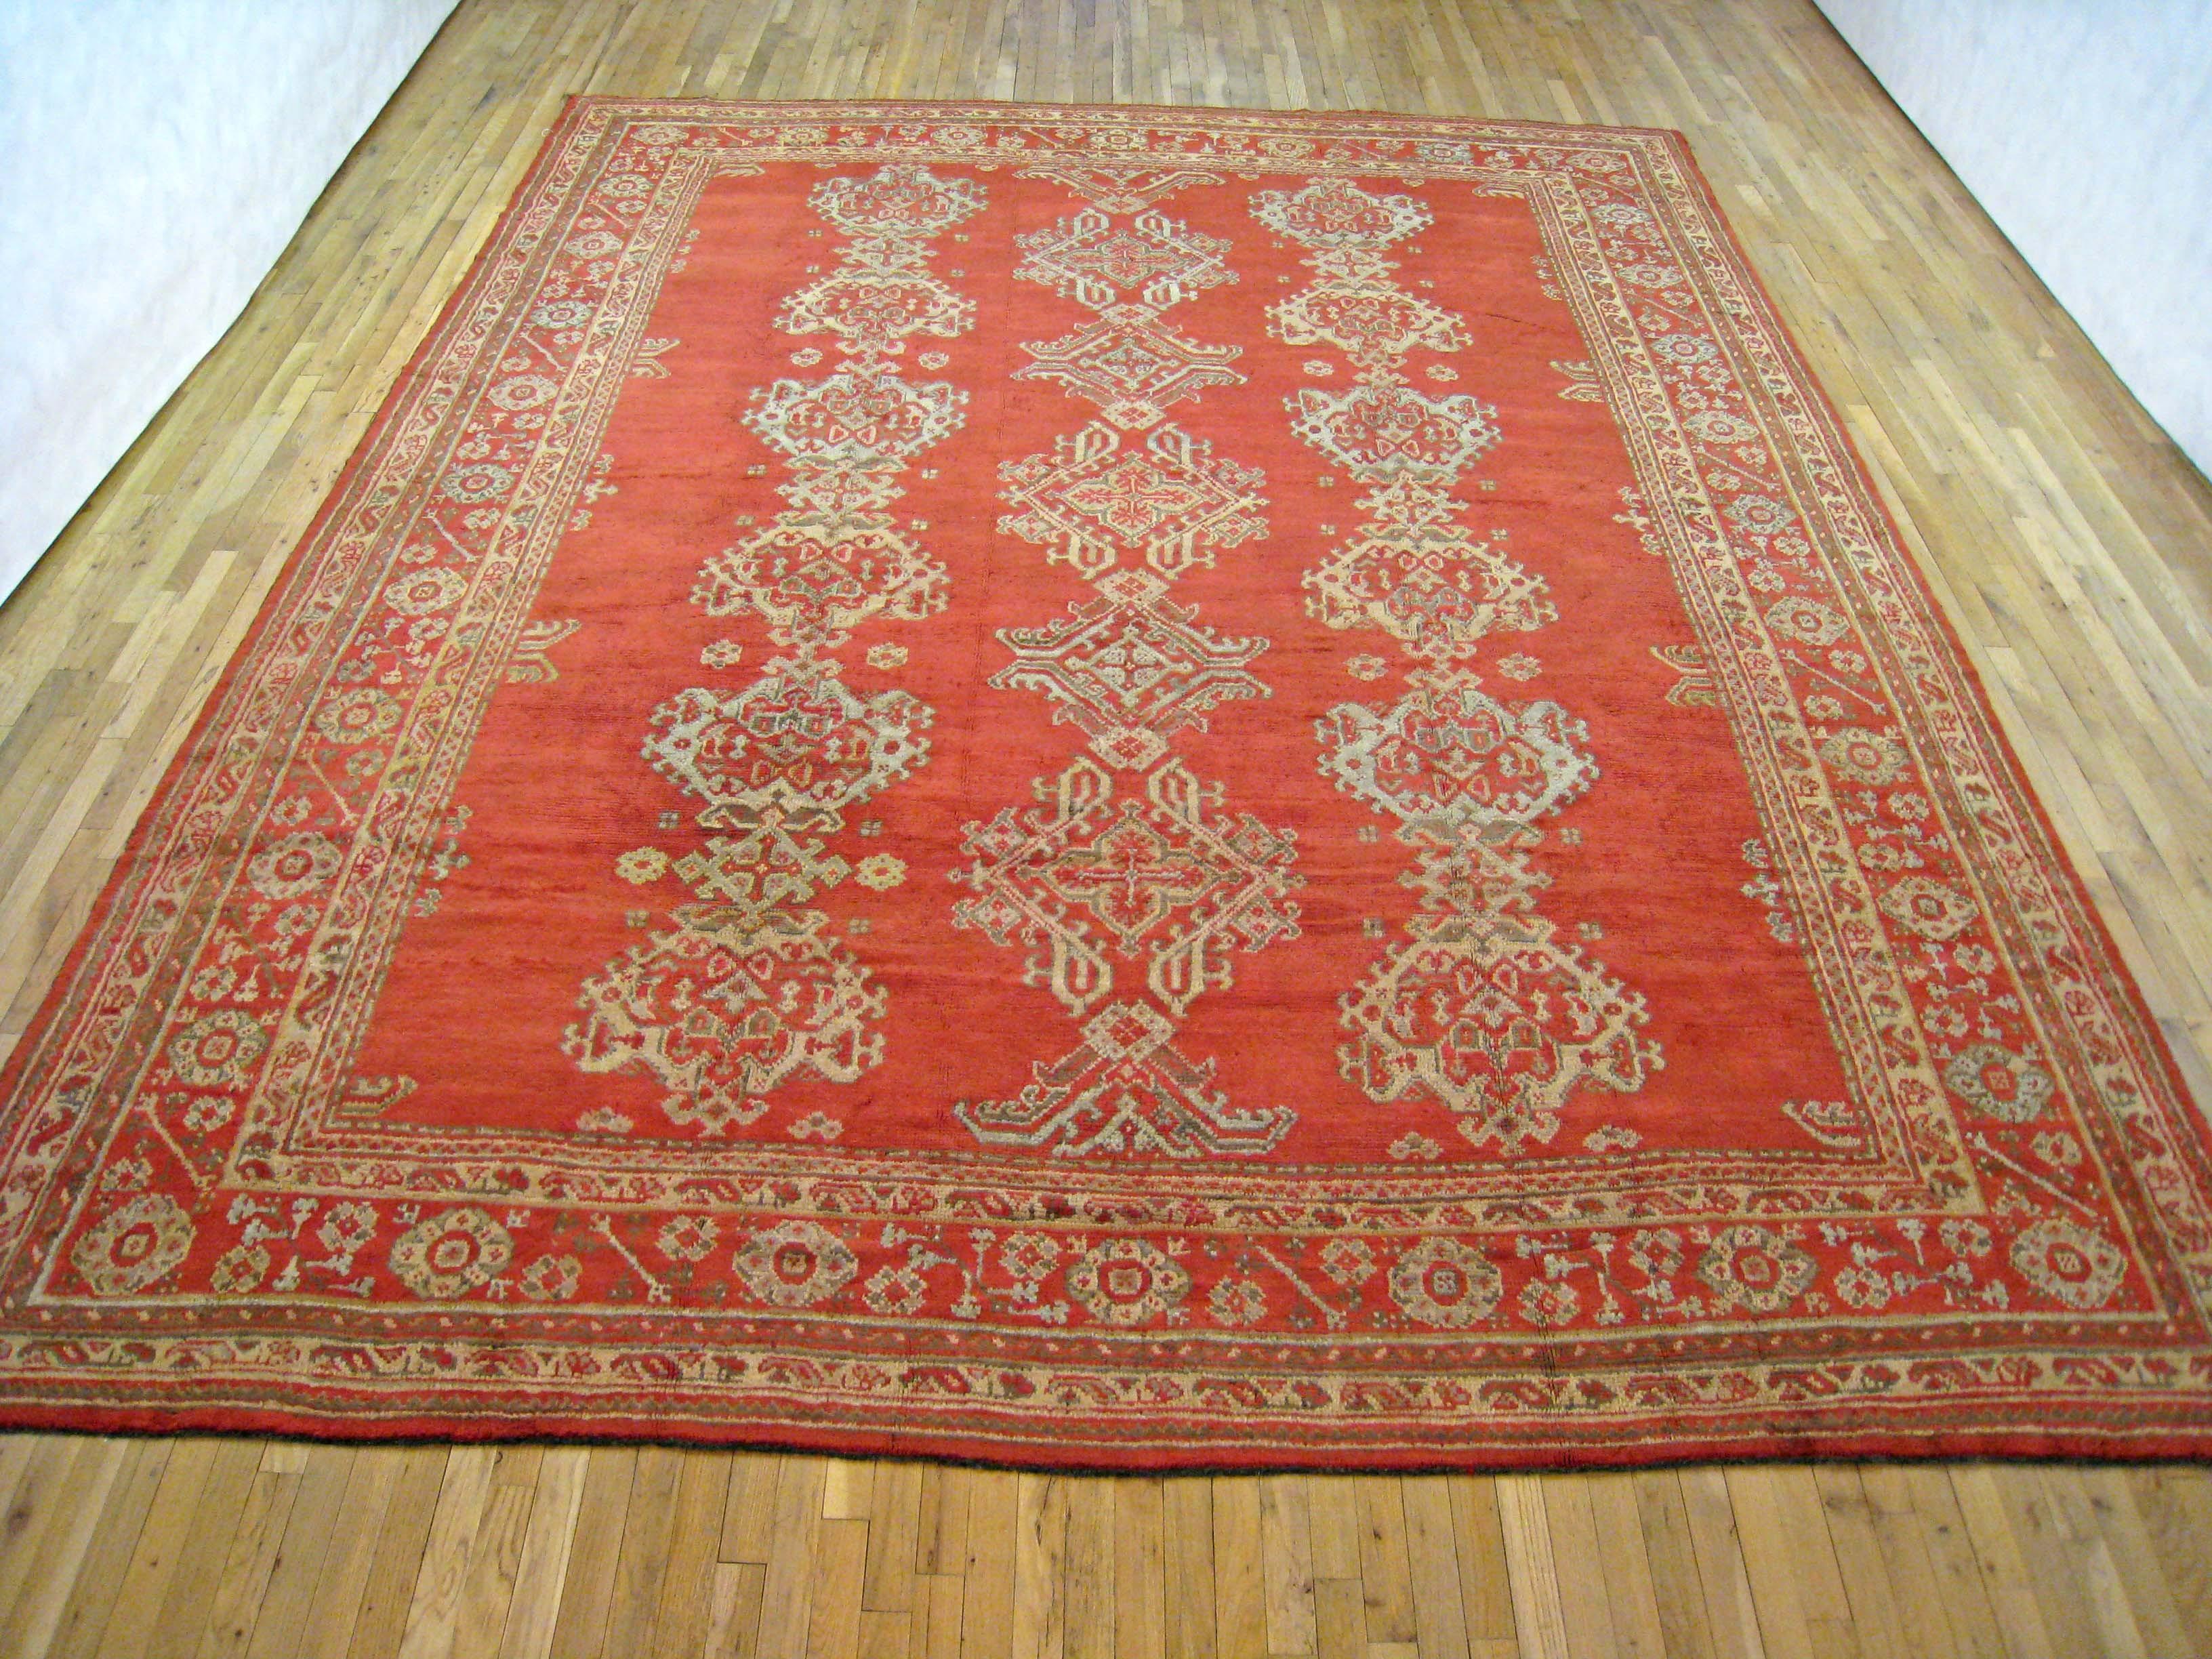 European Antique Hand-Knotted Turkish Oushak Oriental Carpet For Sale